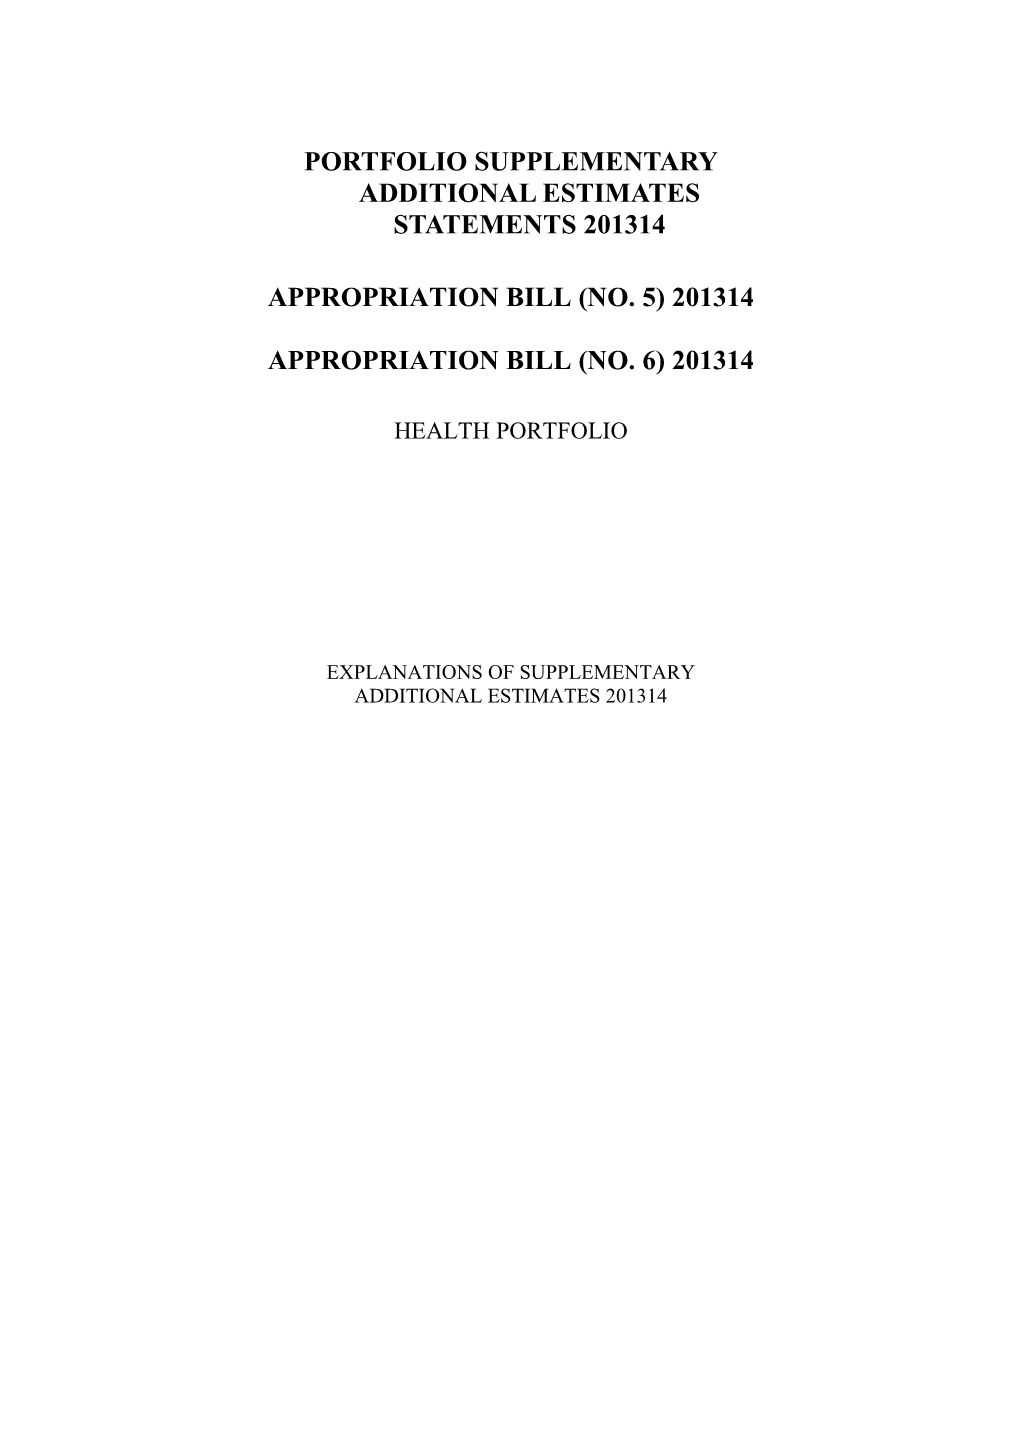 Portfolio Supplementary Additional Estimates Statements 2013 14